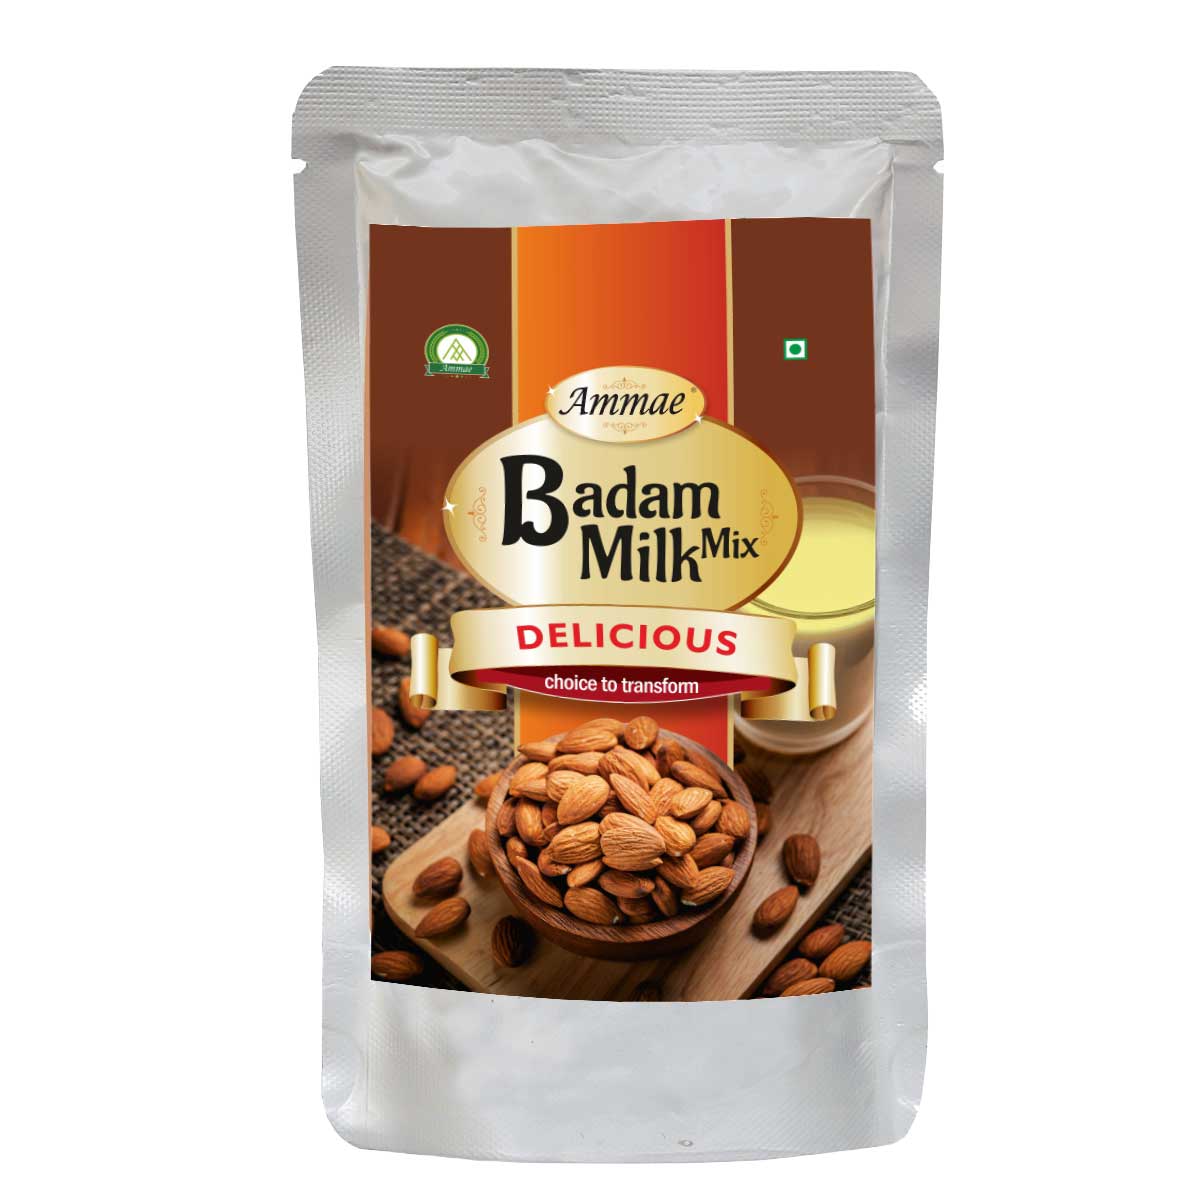 Ammae Badam Milk Mix | Pulses and Spice Mixes - Ammae Foods India